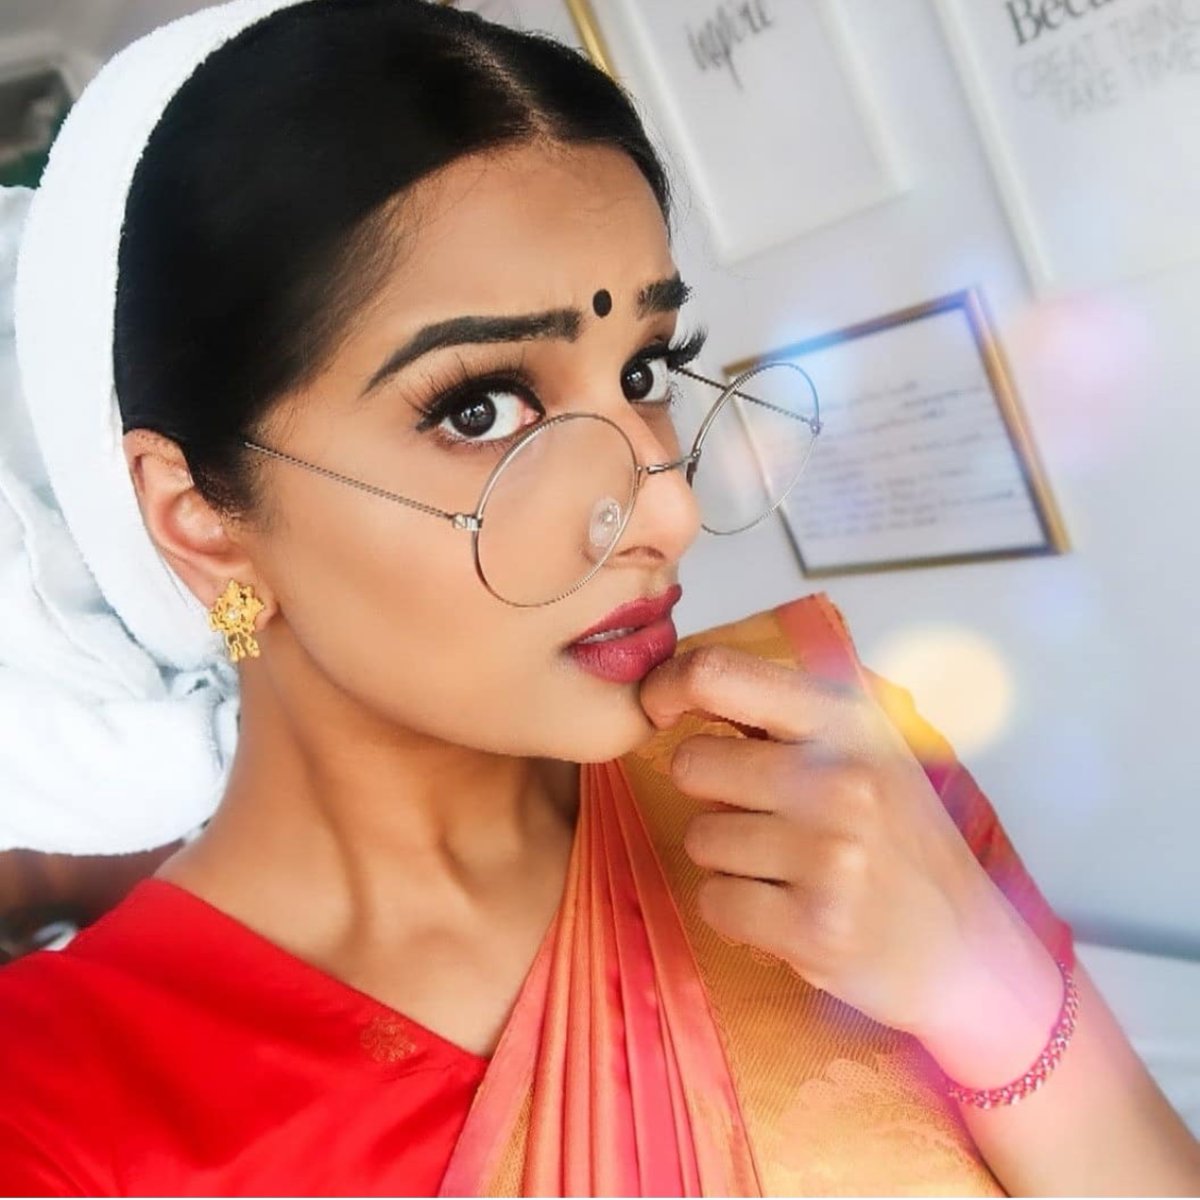 When @elegancebyb nailed it 💯 as Vaishnavi 😍
#makeupartist #jeansmovie #tamiltalent #therawkstarsedition #therawkstars #tamilmagazine